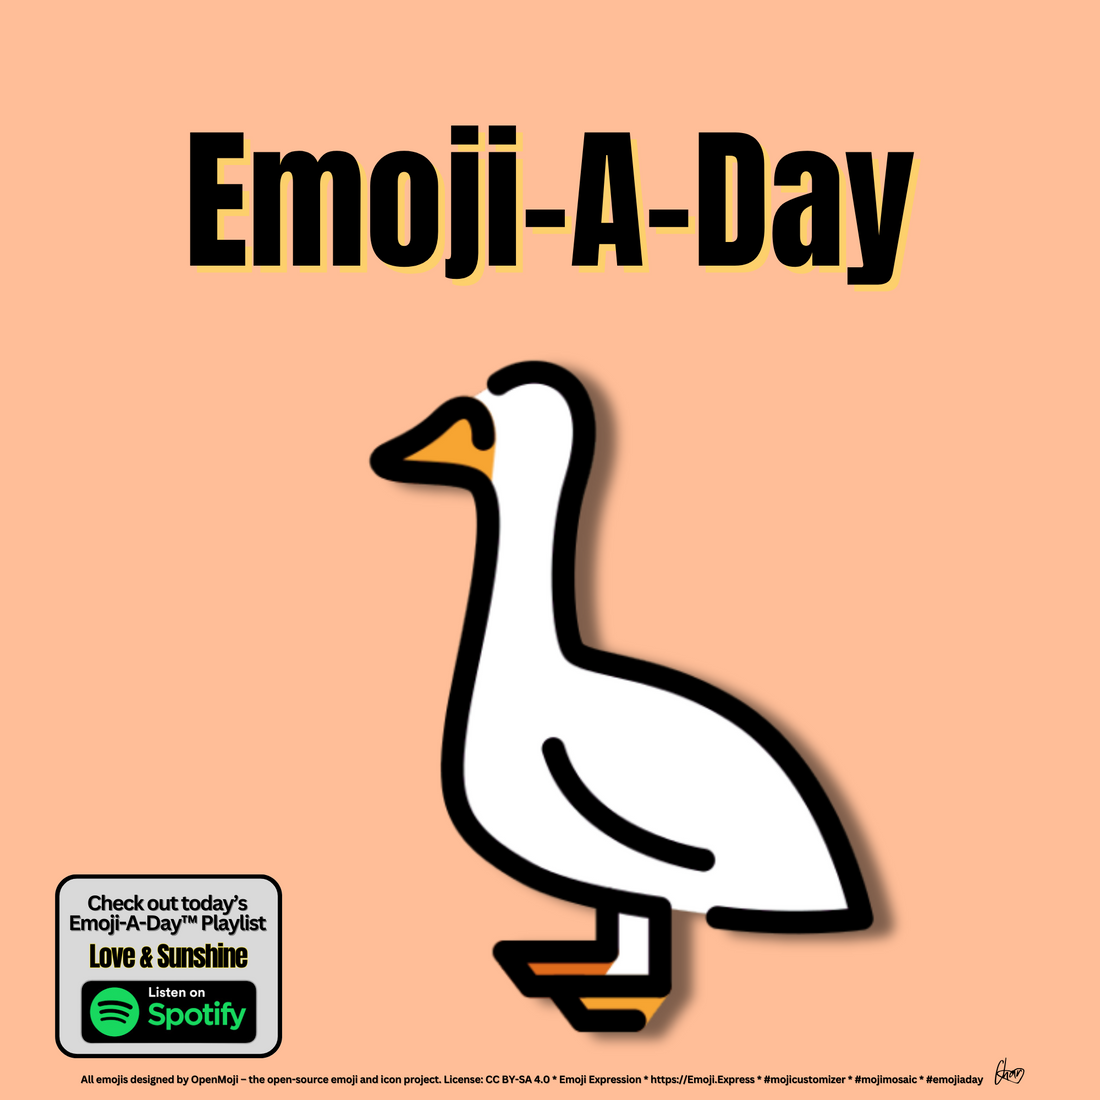 Emoij-A-Day theme with Goose emoji and Love & Sunshine Spotify Playlist